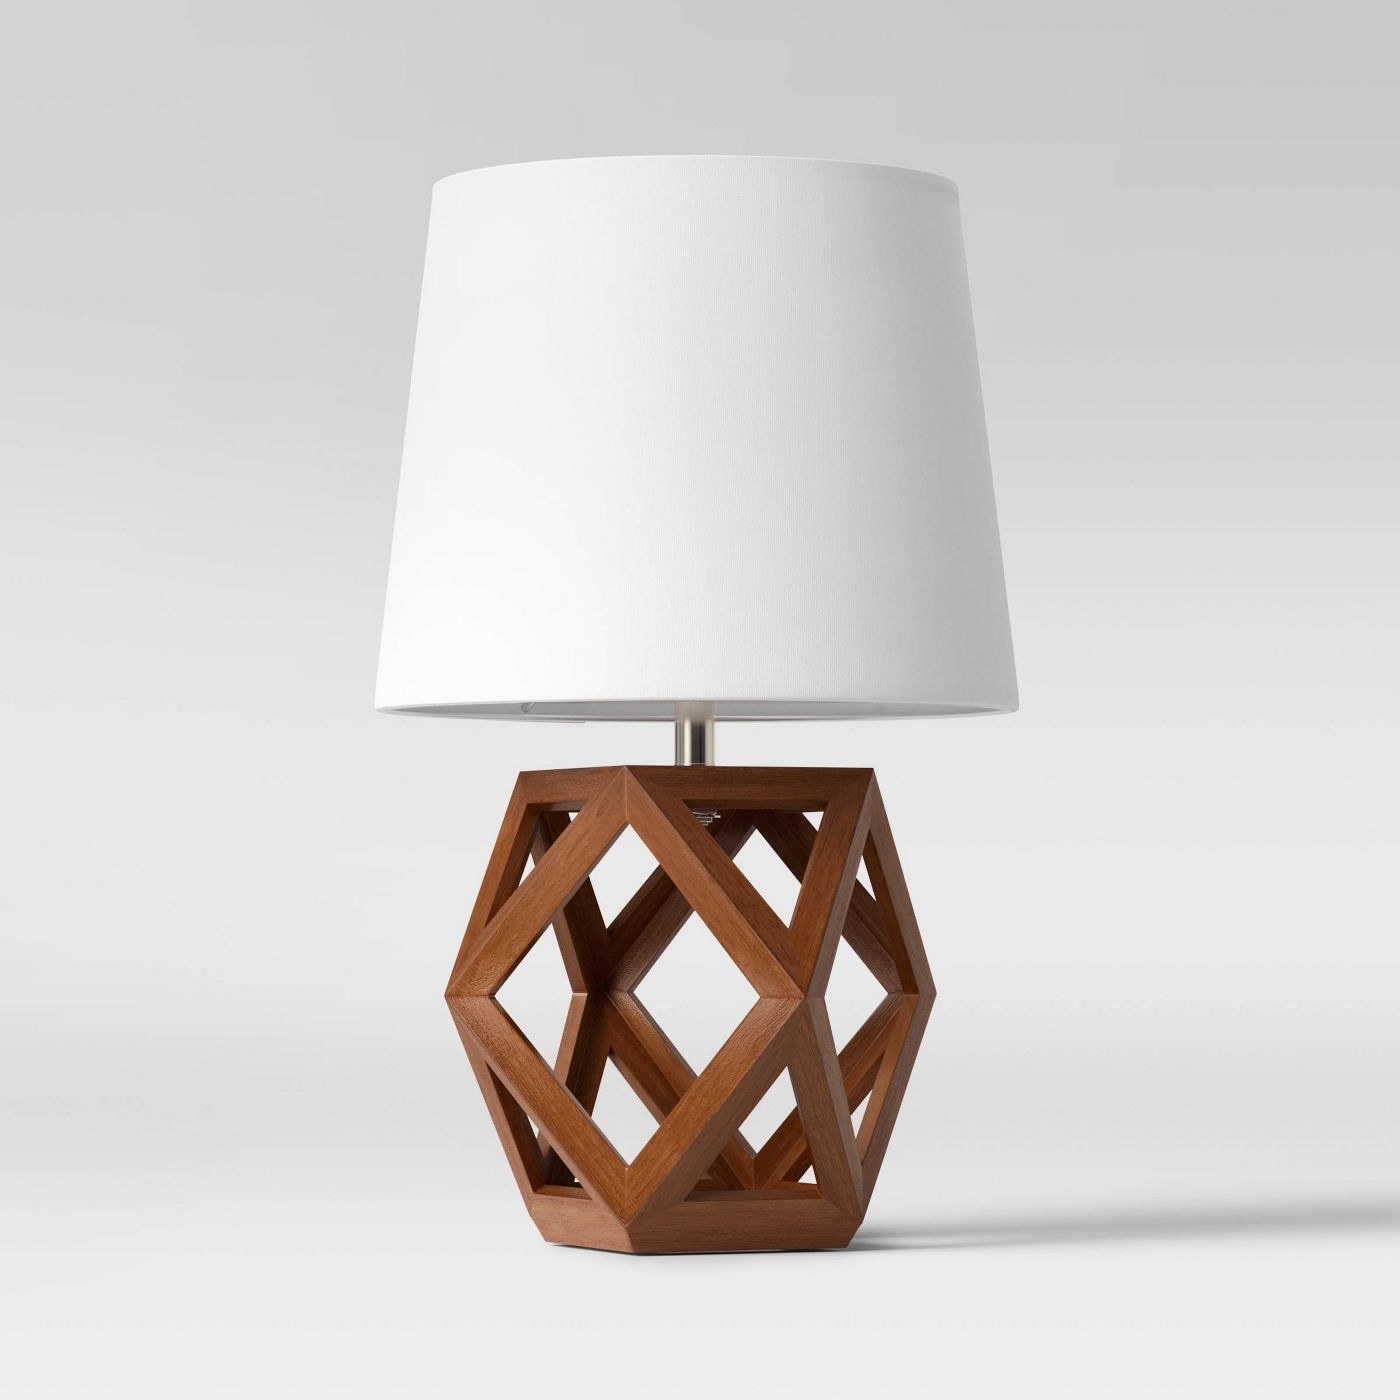 the wooden geometric lamp